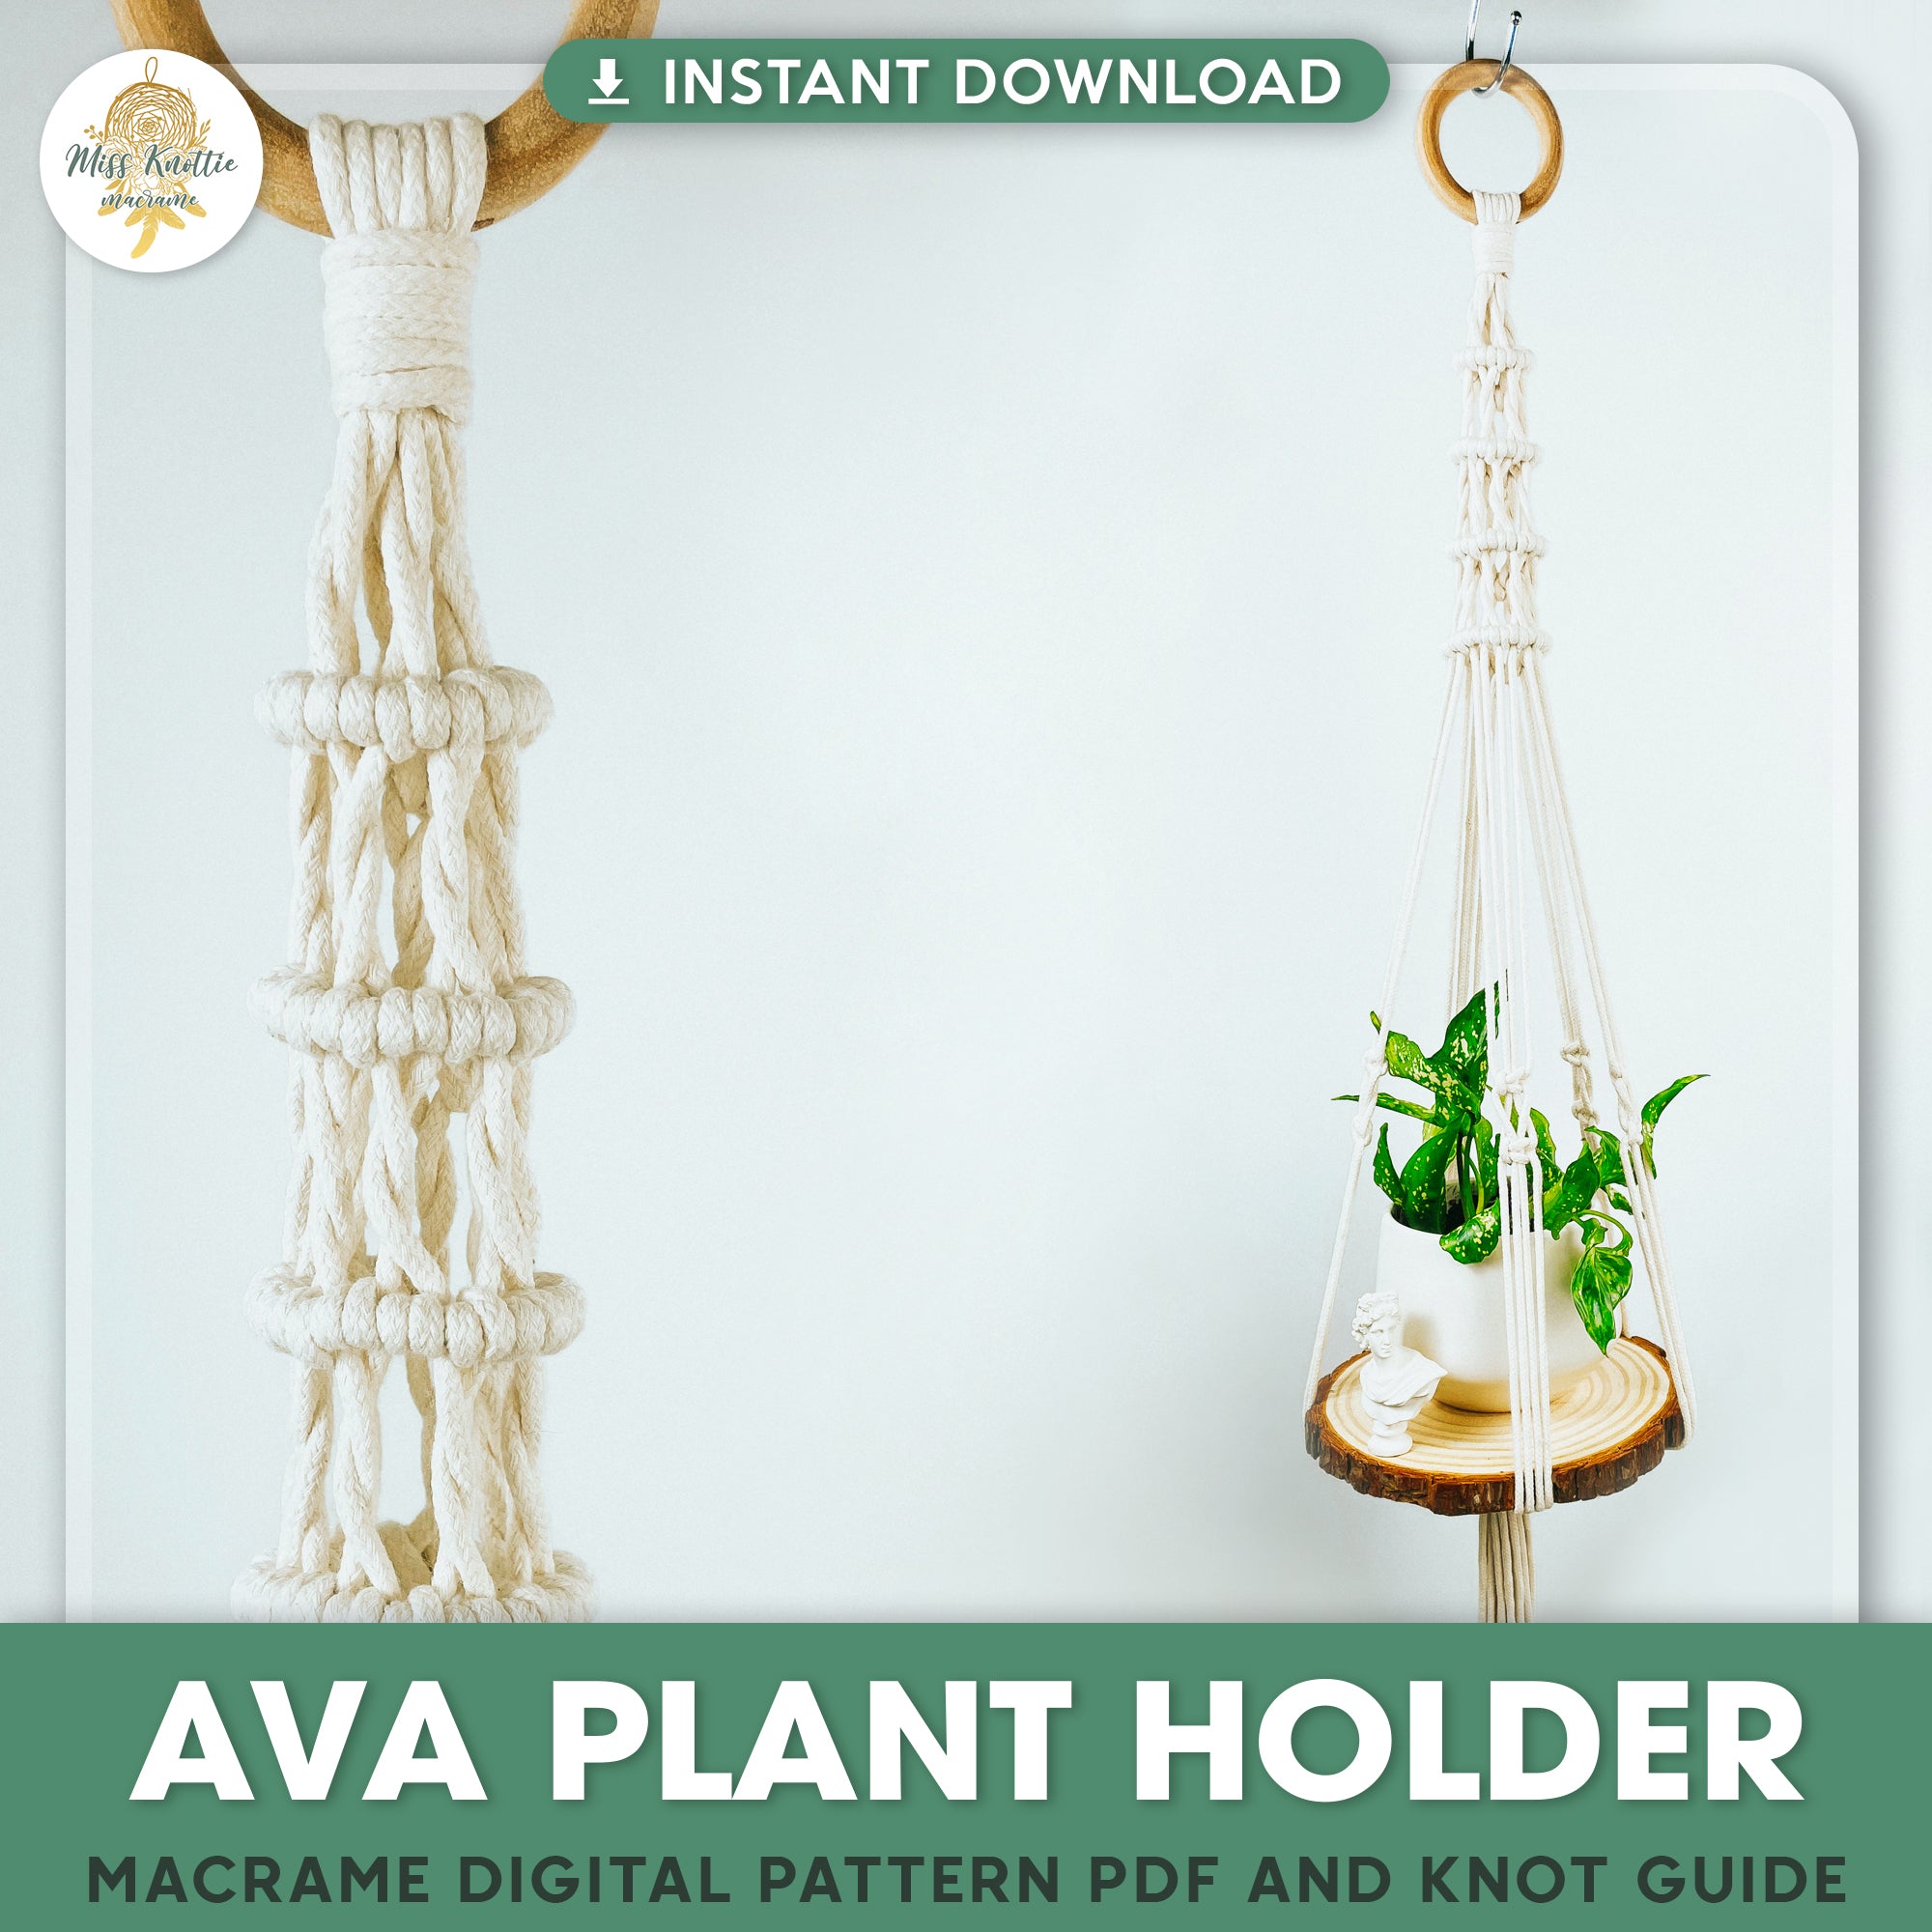 Ava Plant Holder - Guia Digital PDF e Nó